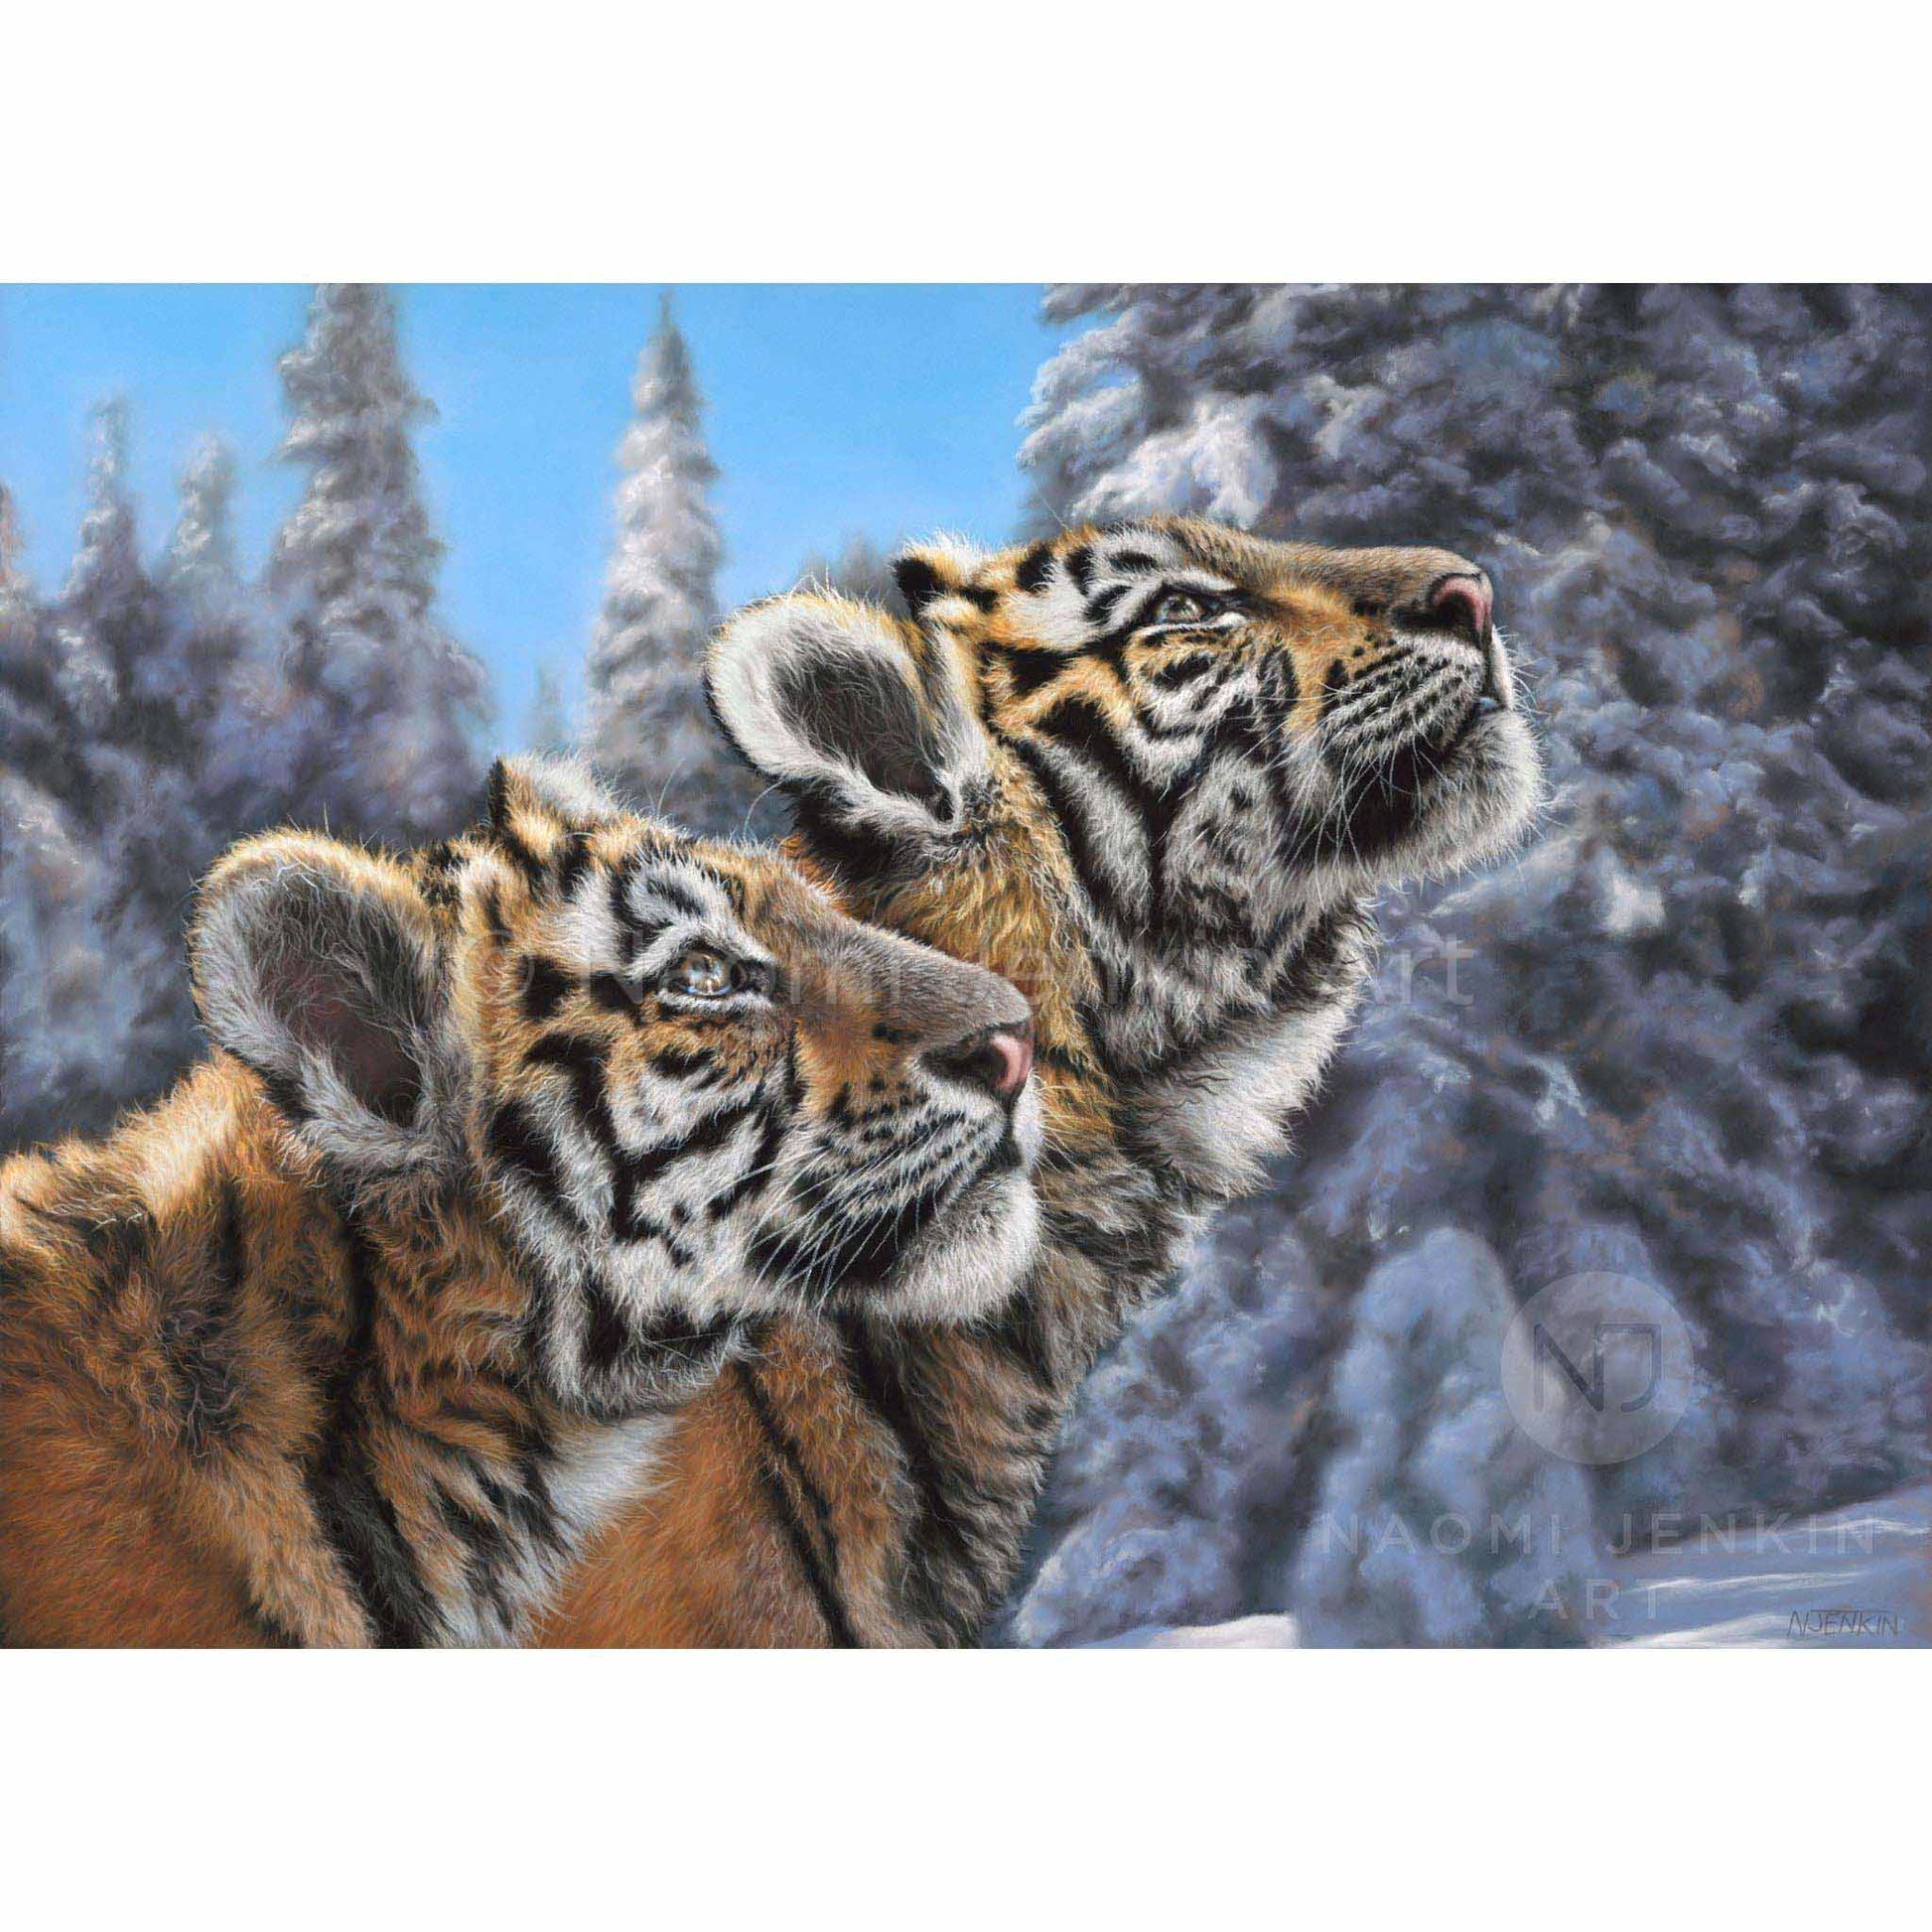 Tiger painting by wildlife artist Naomi Jenkin. 